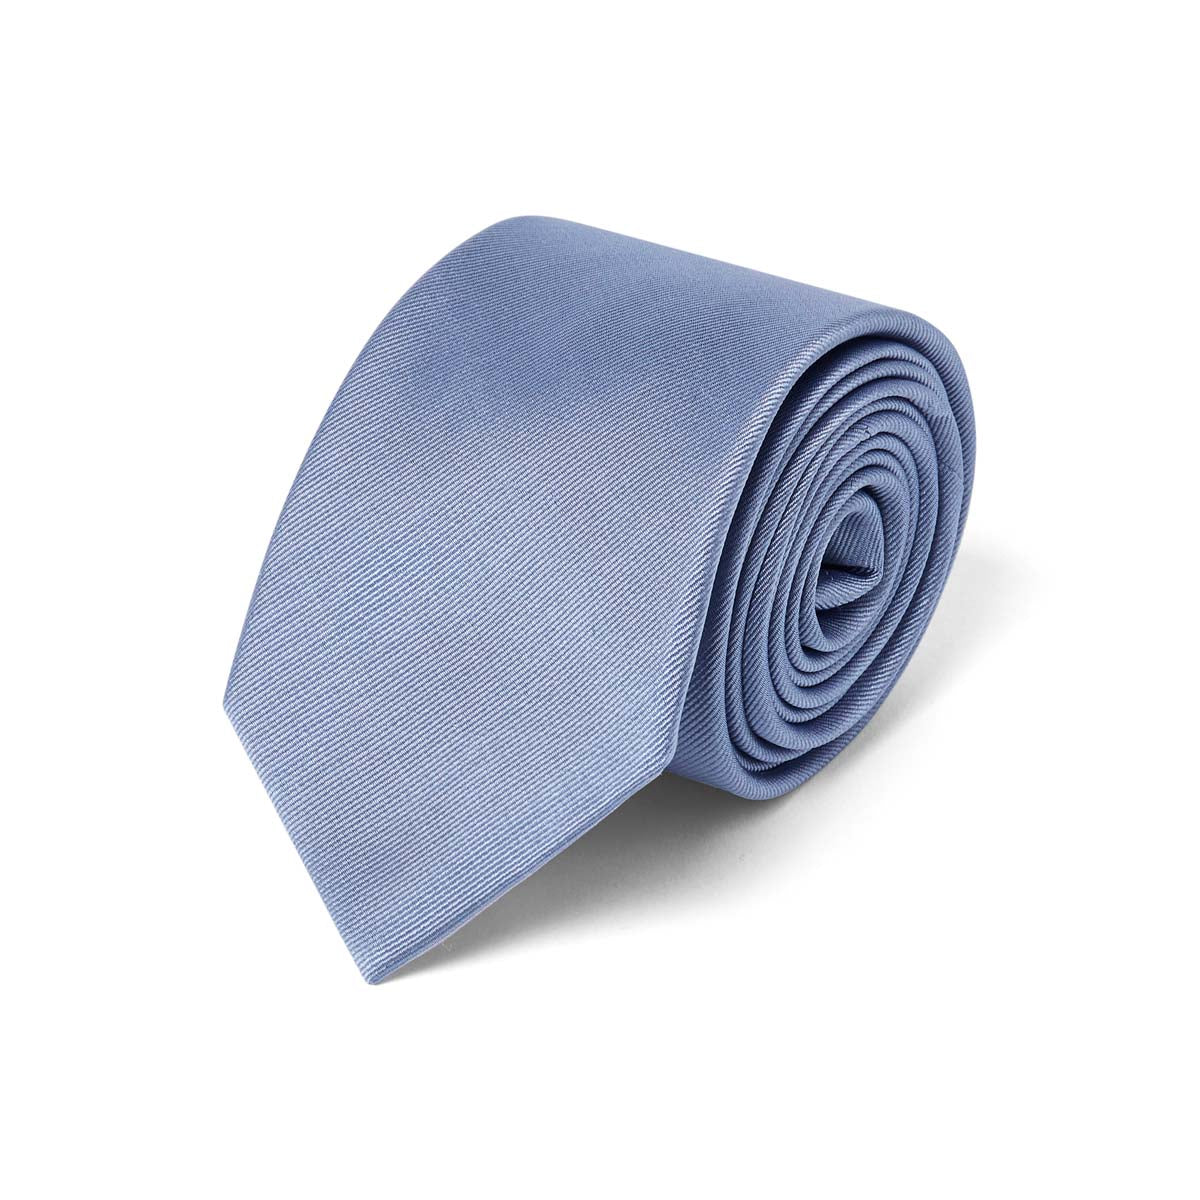 Cravate twill bleu gris